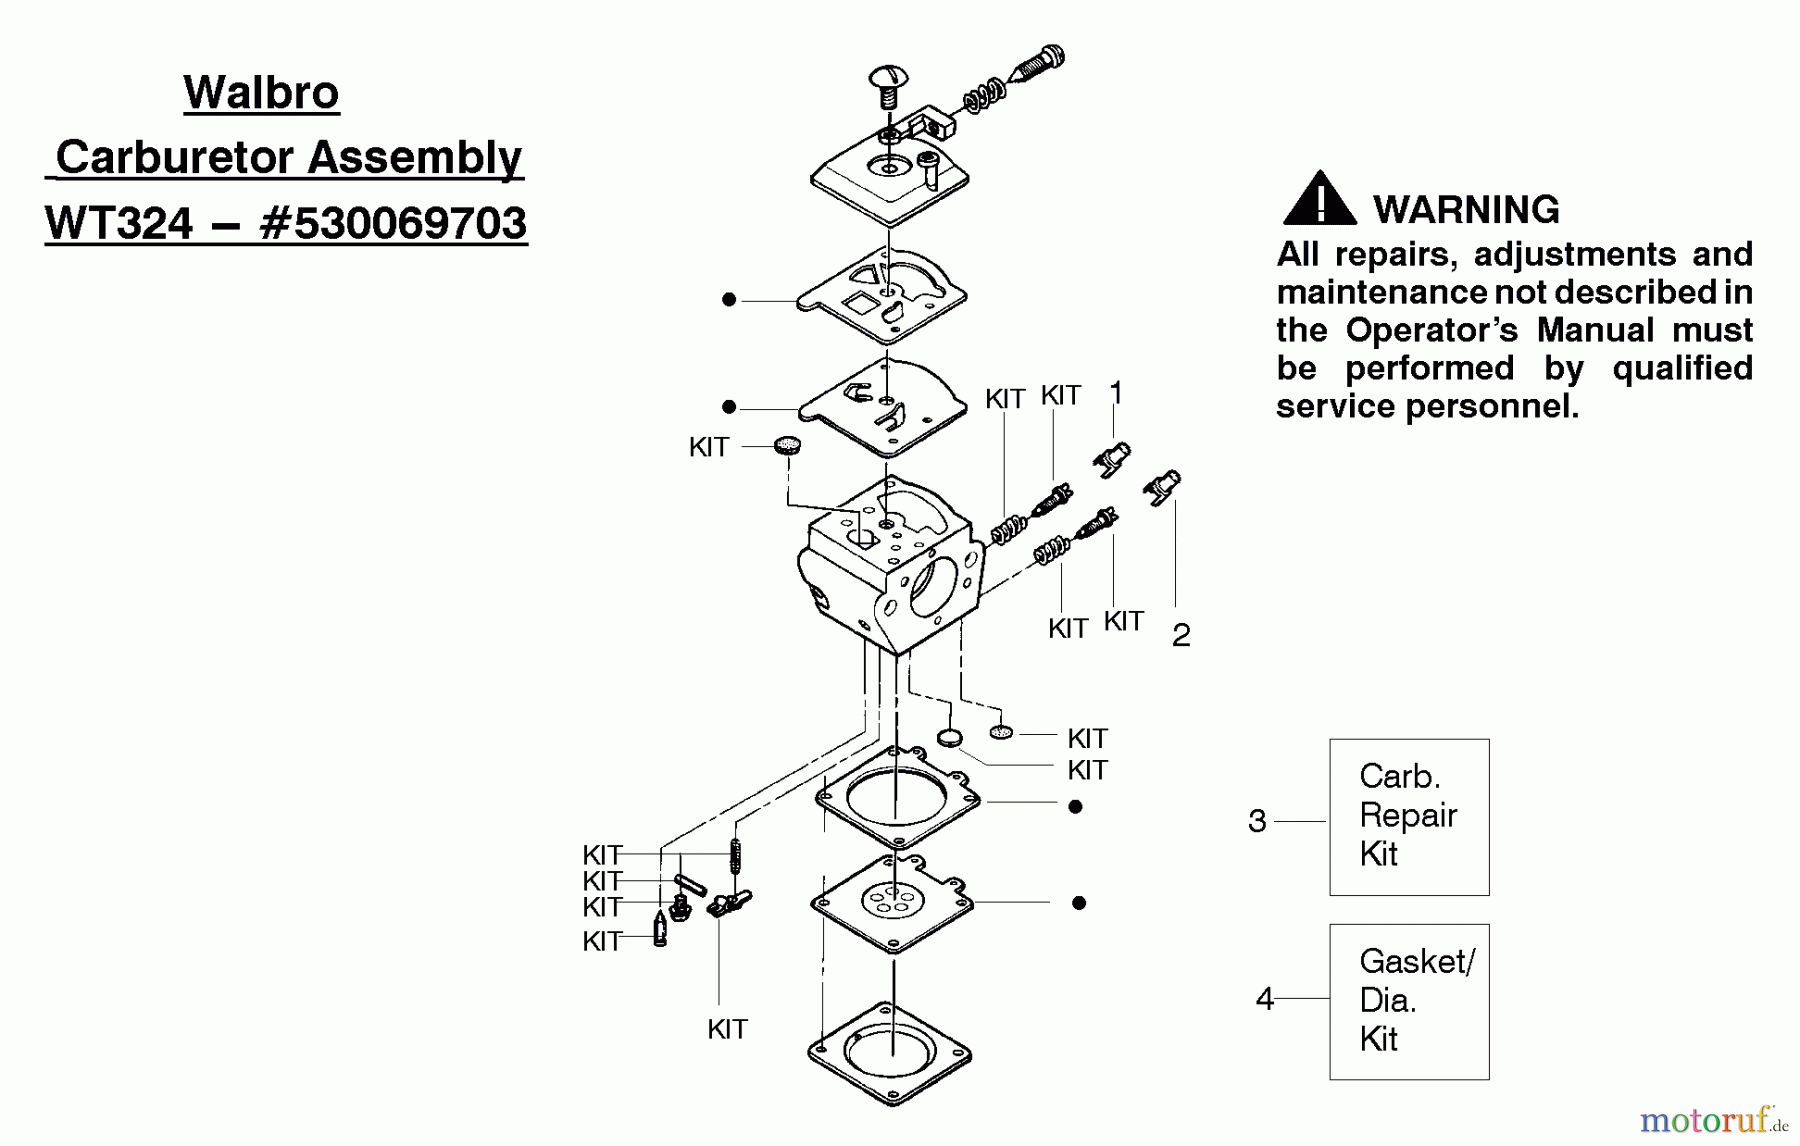  Poulan / Weed Eater Motorsägen 2150 (Type 1) - Poulan Predator Chainsaw Carburetor Assembly (Walbro WT324) 530069703